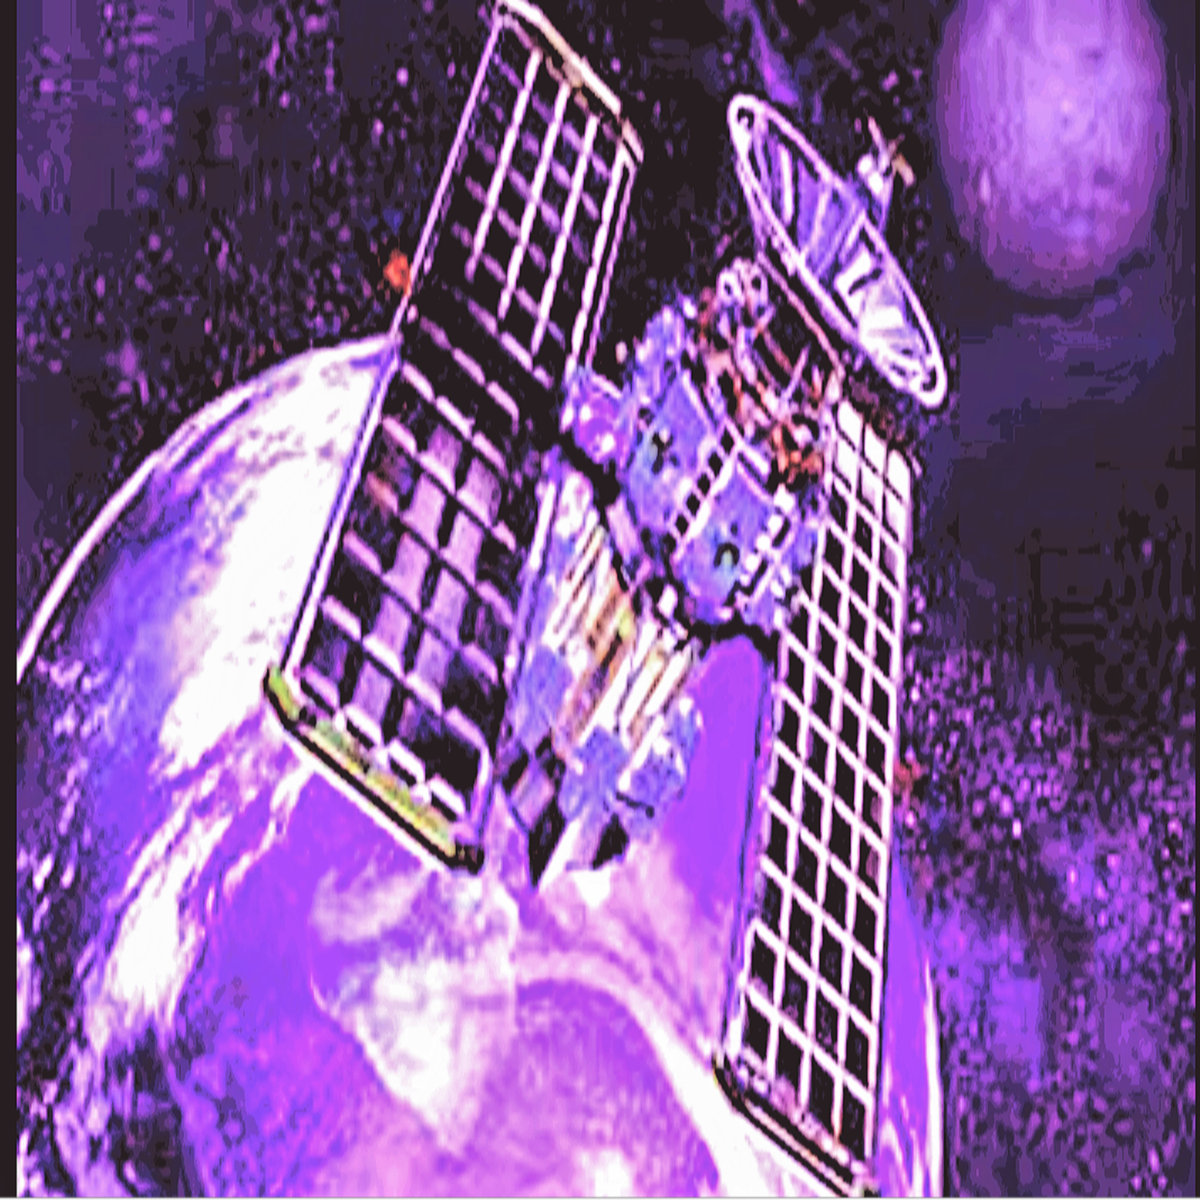 Hobbes Duende - "Scrapin Satellites" (Release)